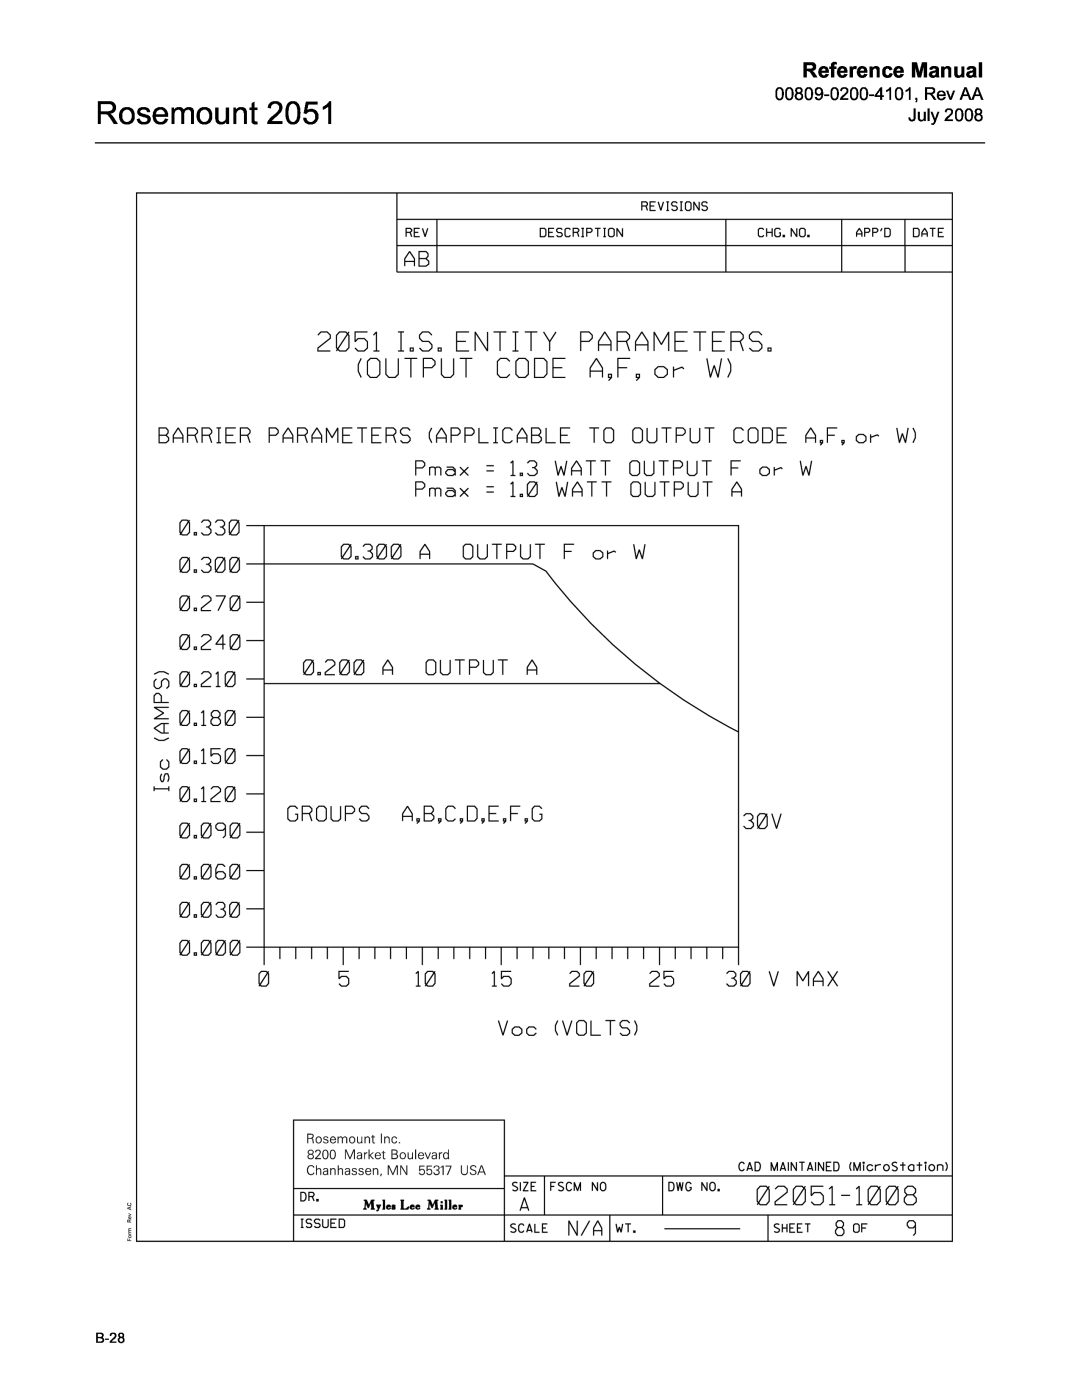 Emerson Process Management 2051 manual Rosemount, Reference Manual, B-28 